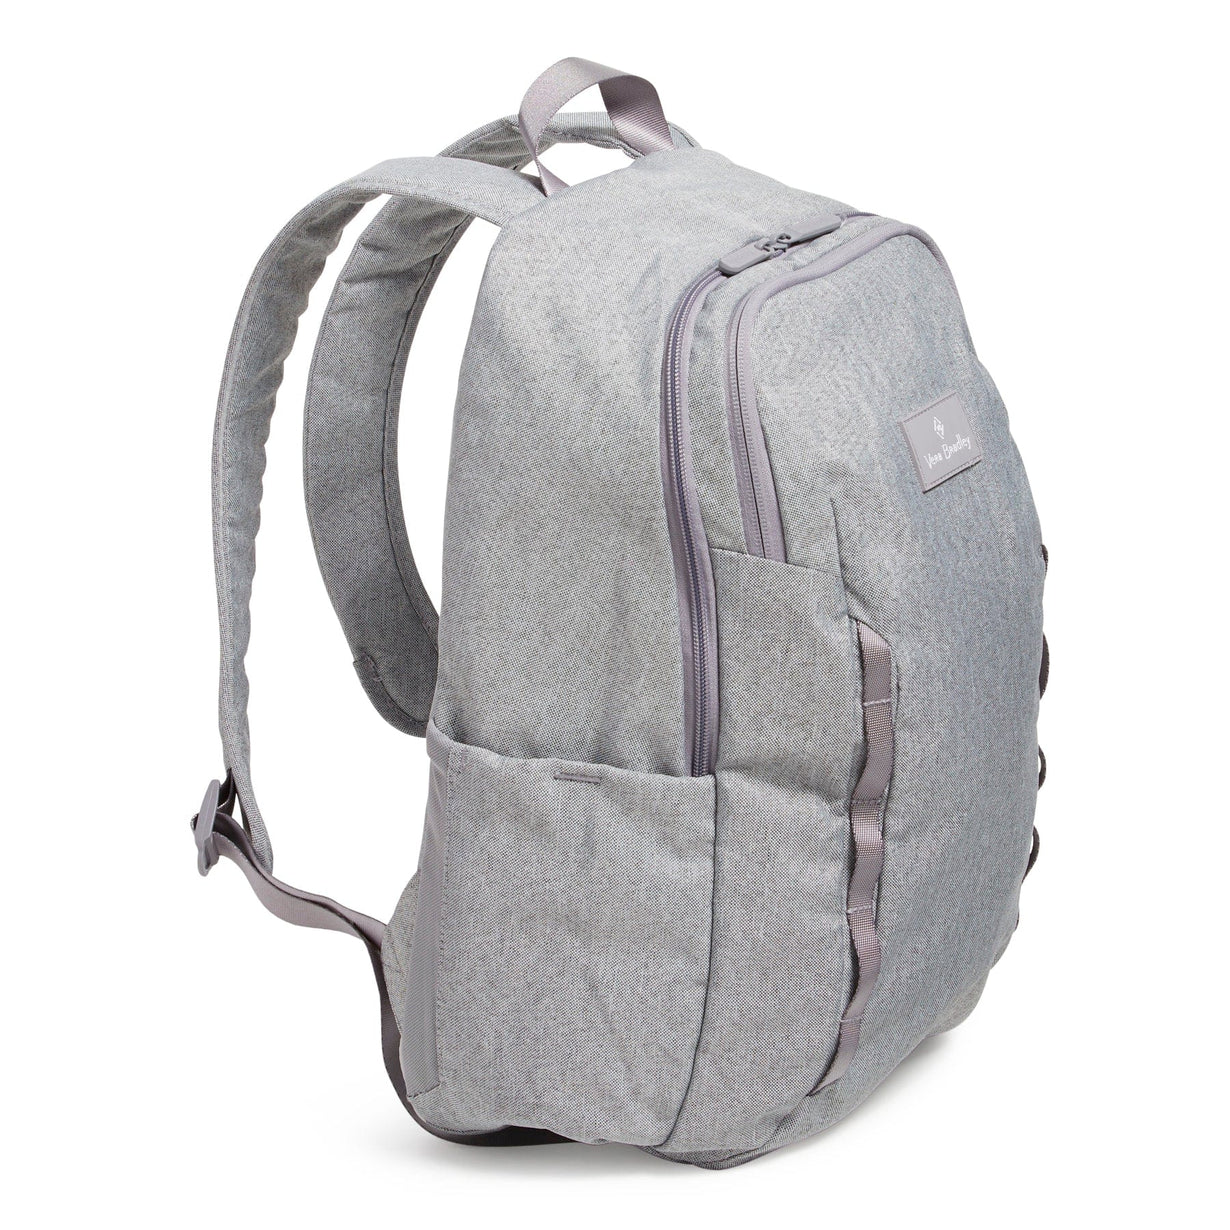 Vera Bradley Factory Style Lighten Up Sporty Large Backpack - ShopStyle